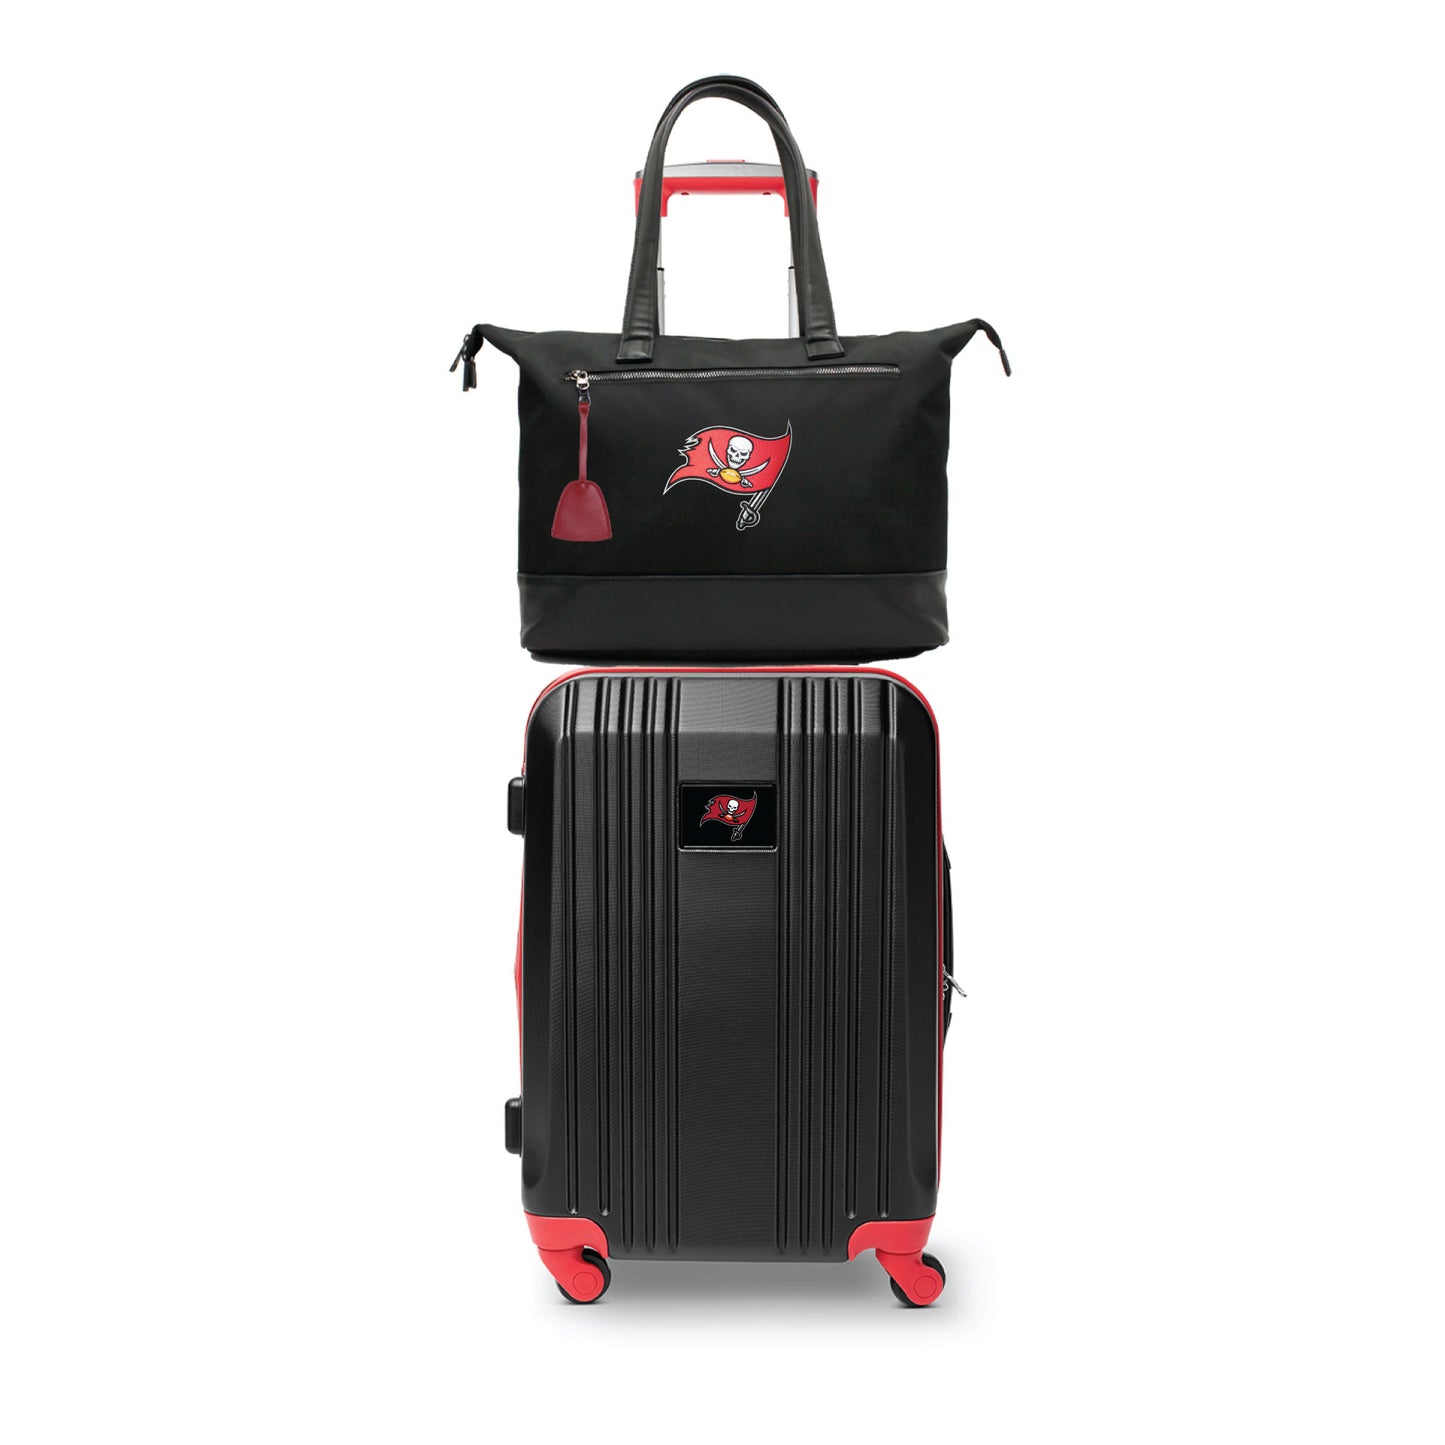 Tampa Bay Buccaneers Premium Laptop Tote Bag and Luggage Set